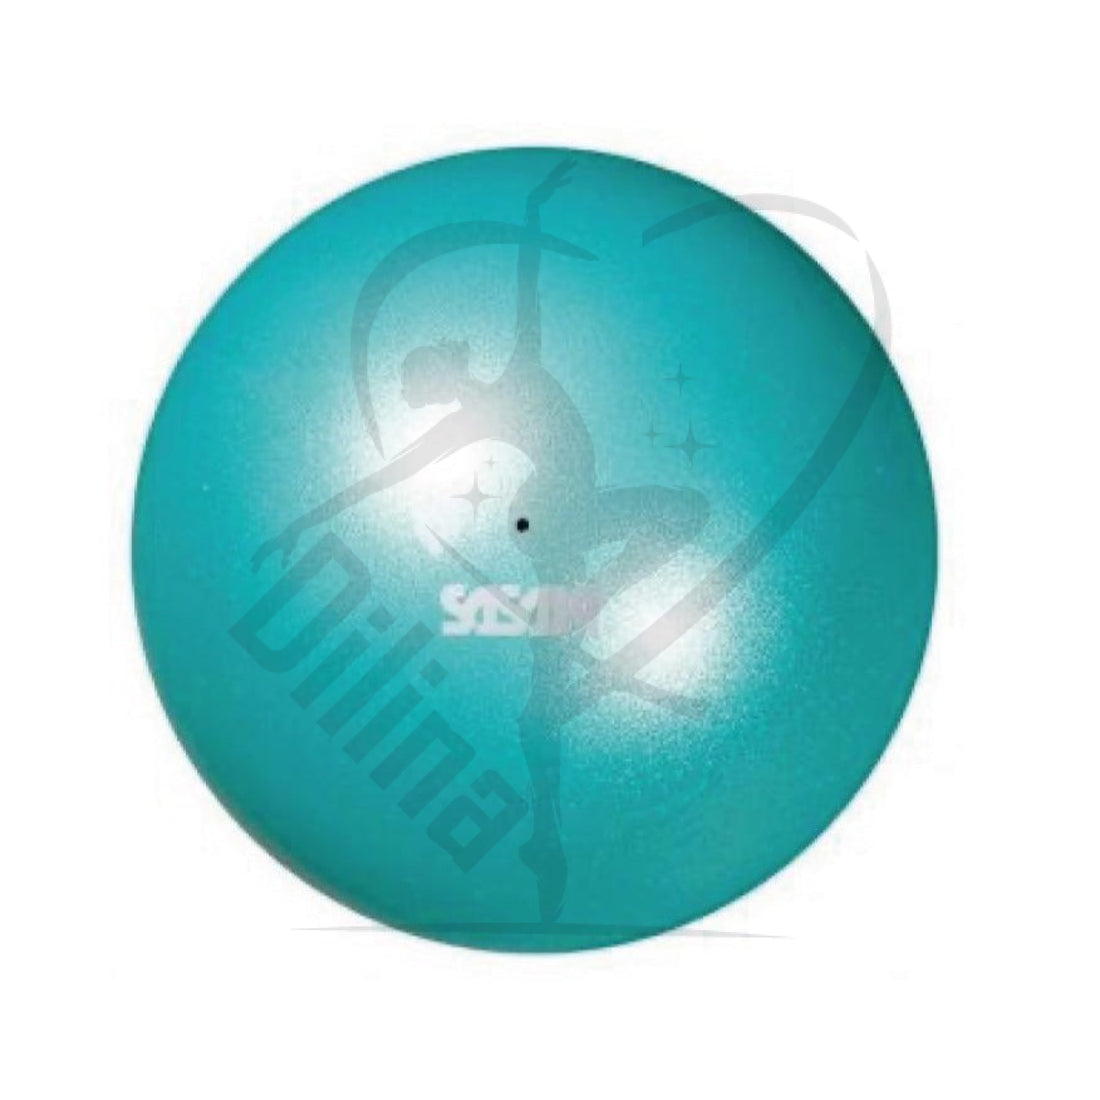 Sasaki Metallic Ball 18Cm Aqua Green Balls